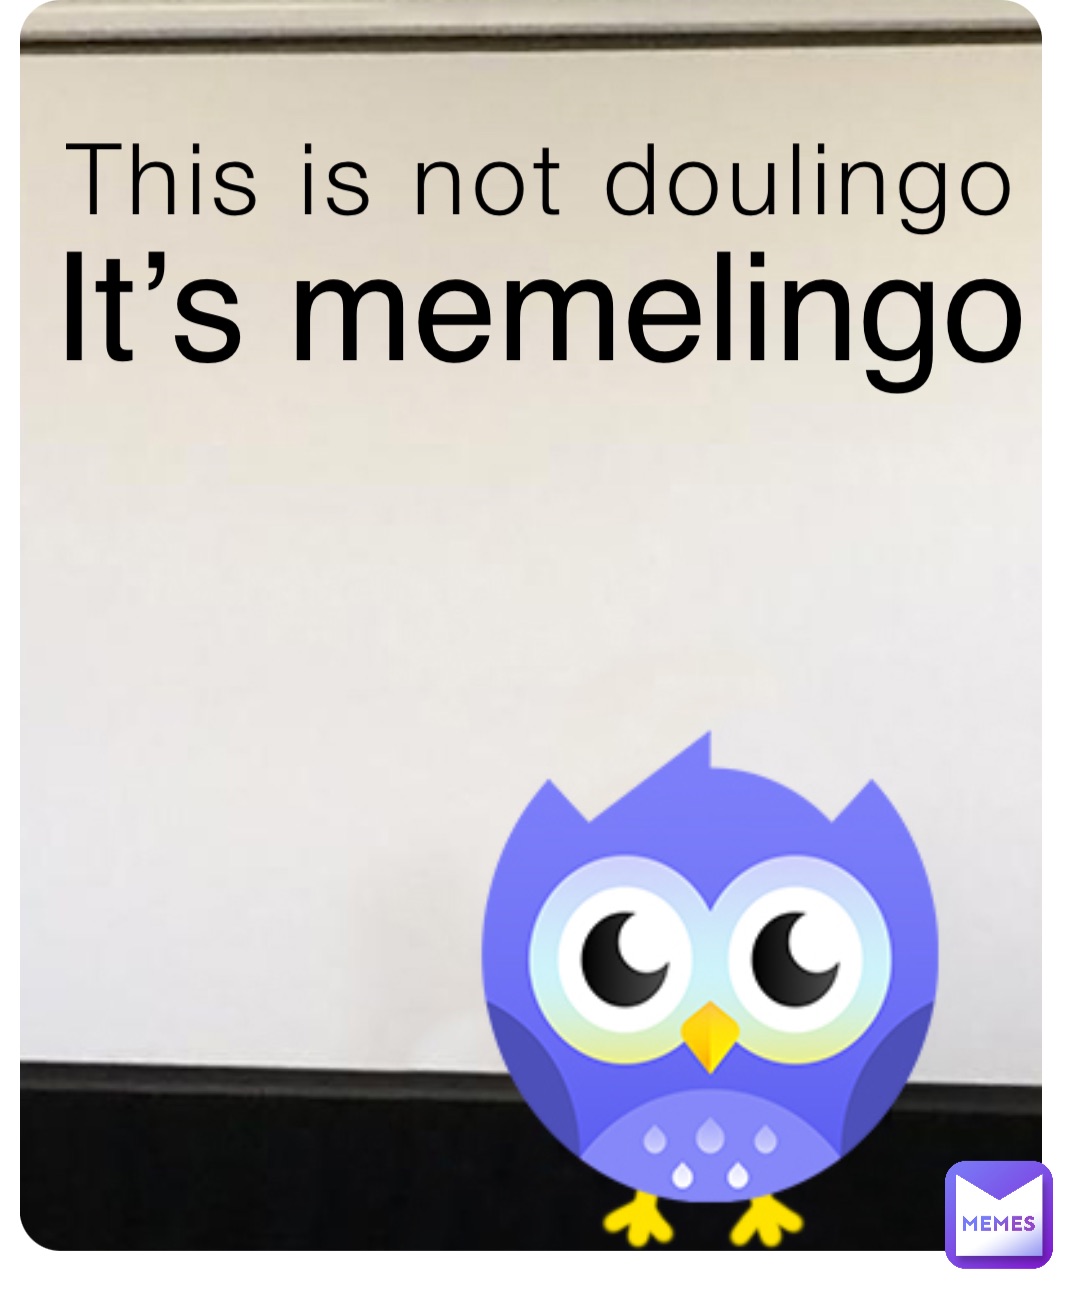 This is not doulingo It’s memelingo